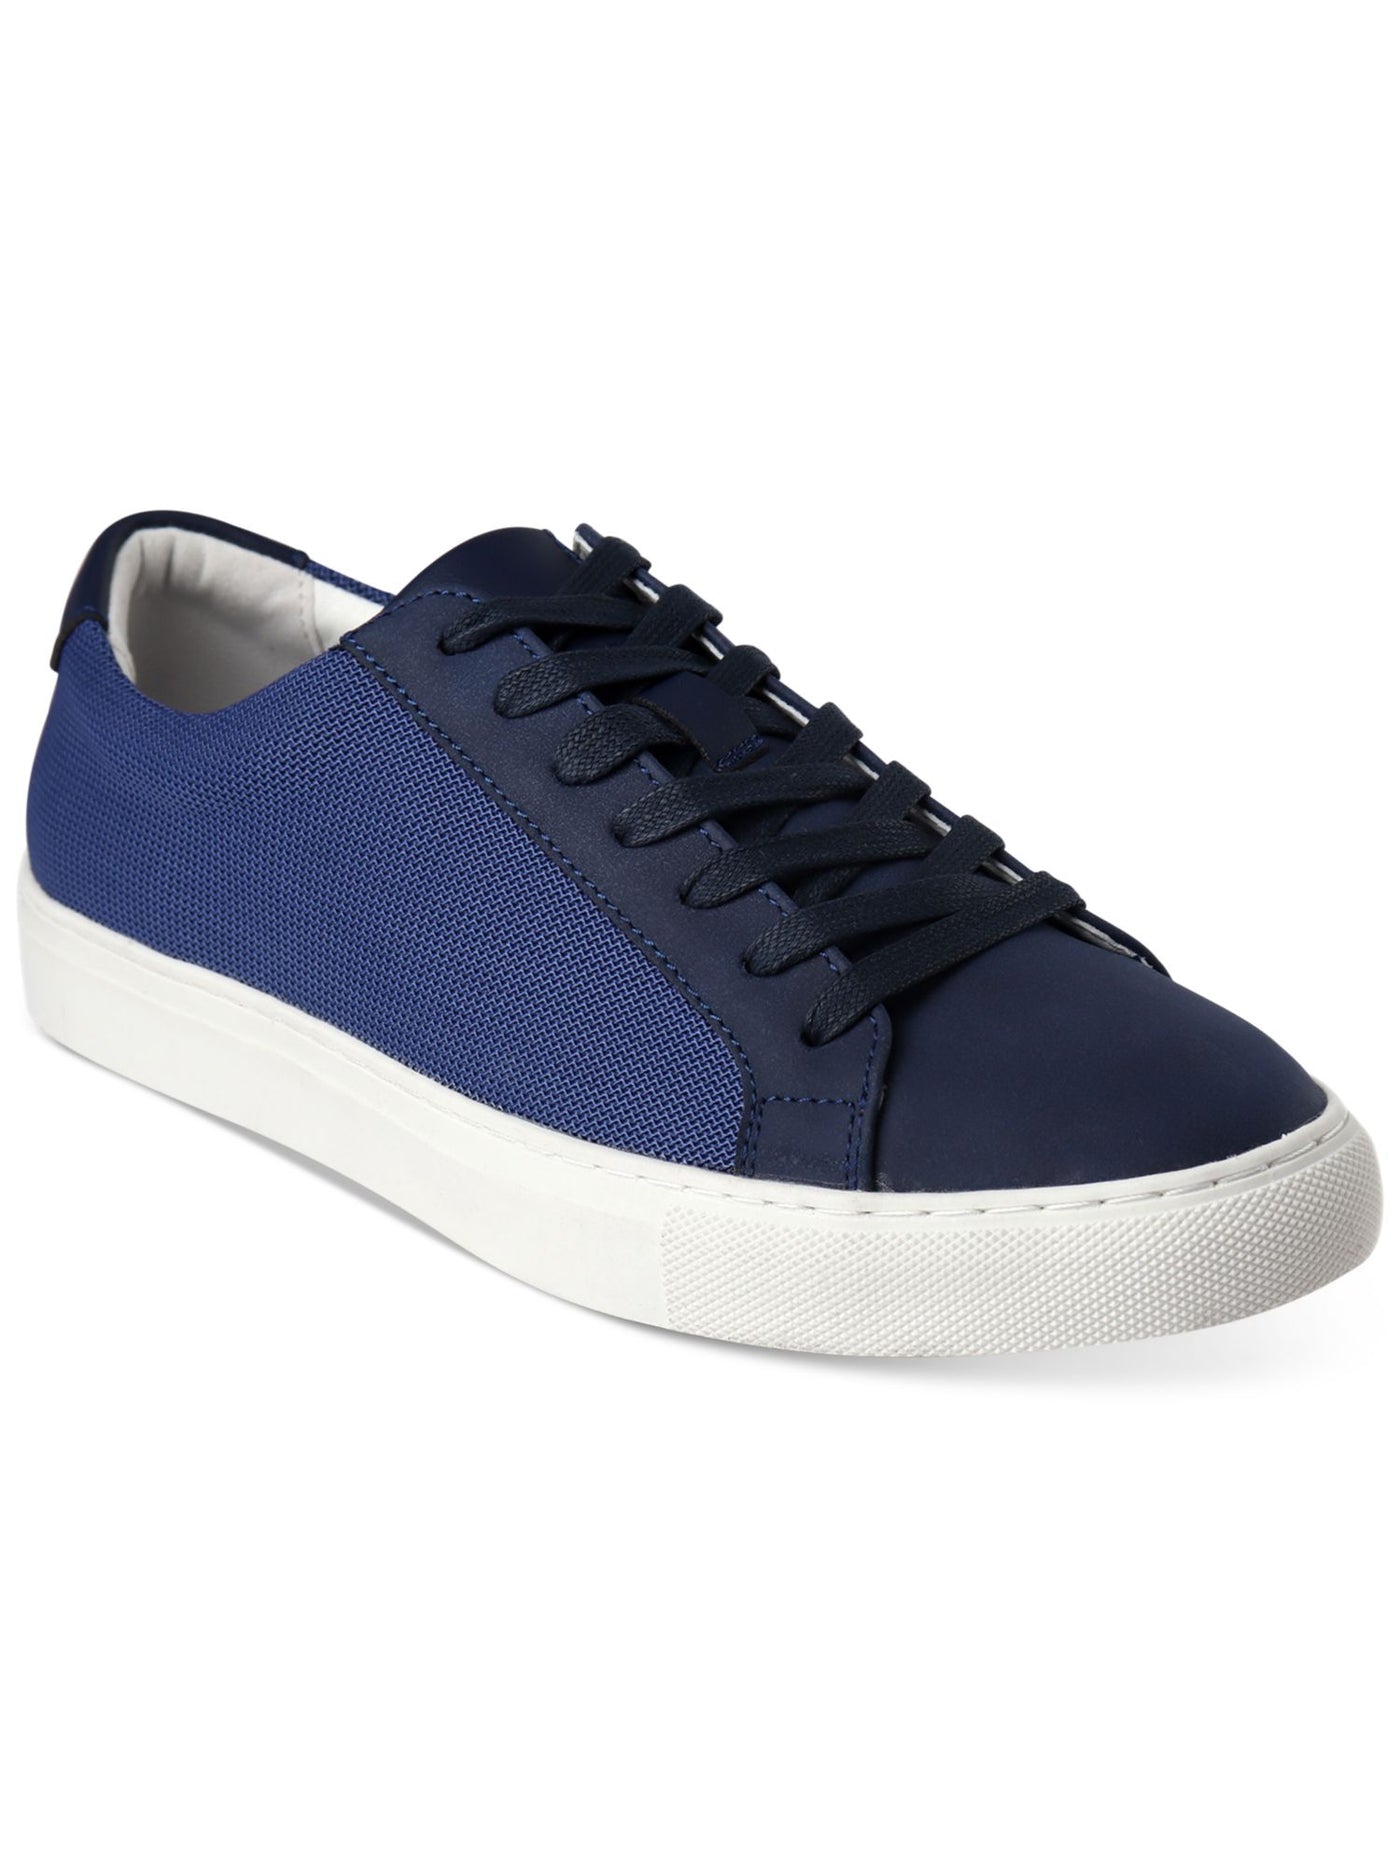 ALFANI Mens Blue Comfort Grayson Round Toe Platform Lace-Up Athletic Sneakers Shoes 11 M